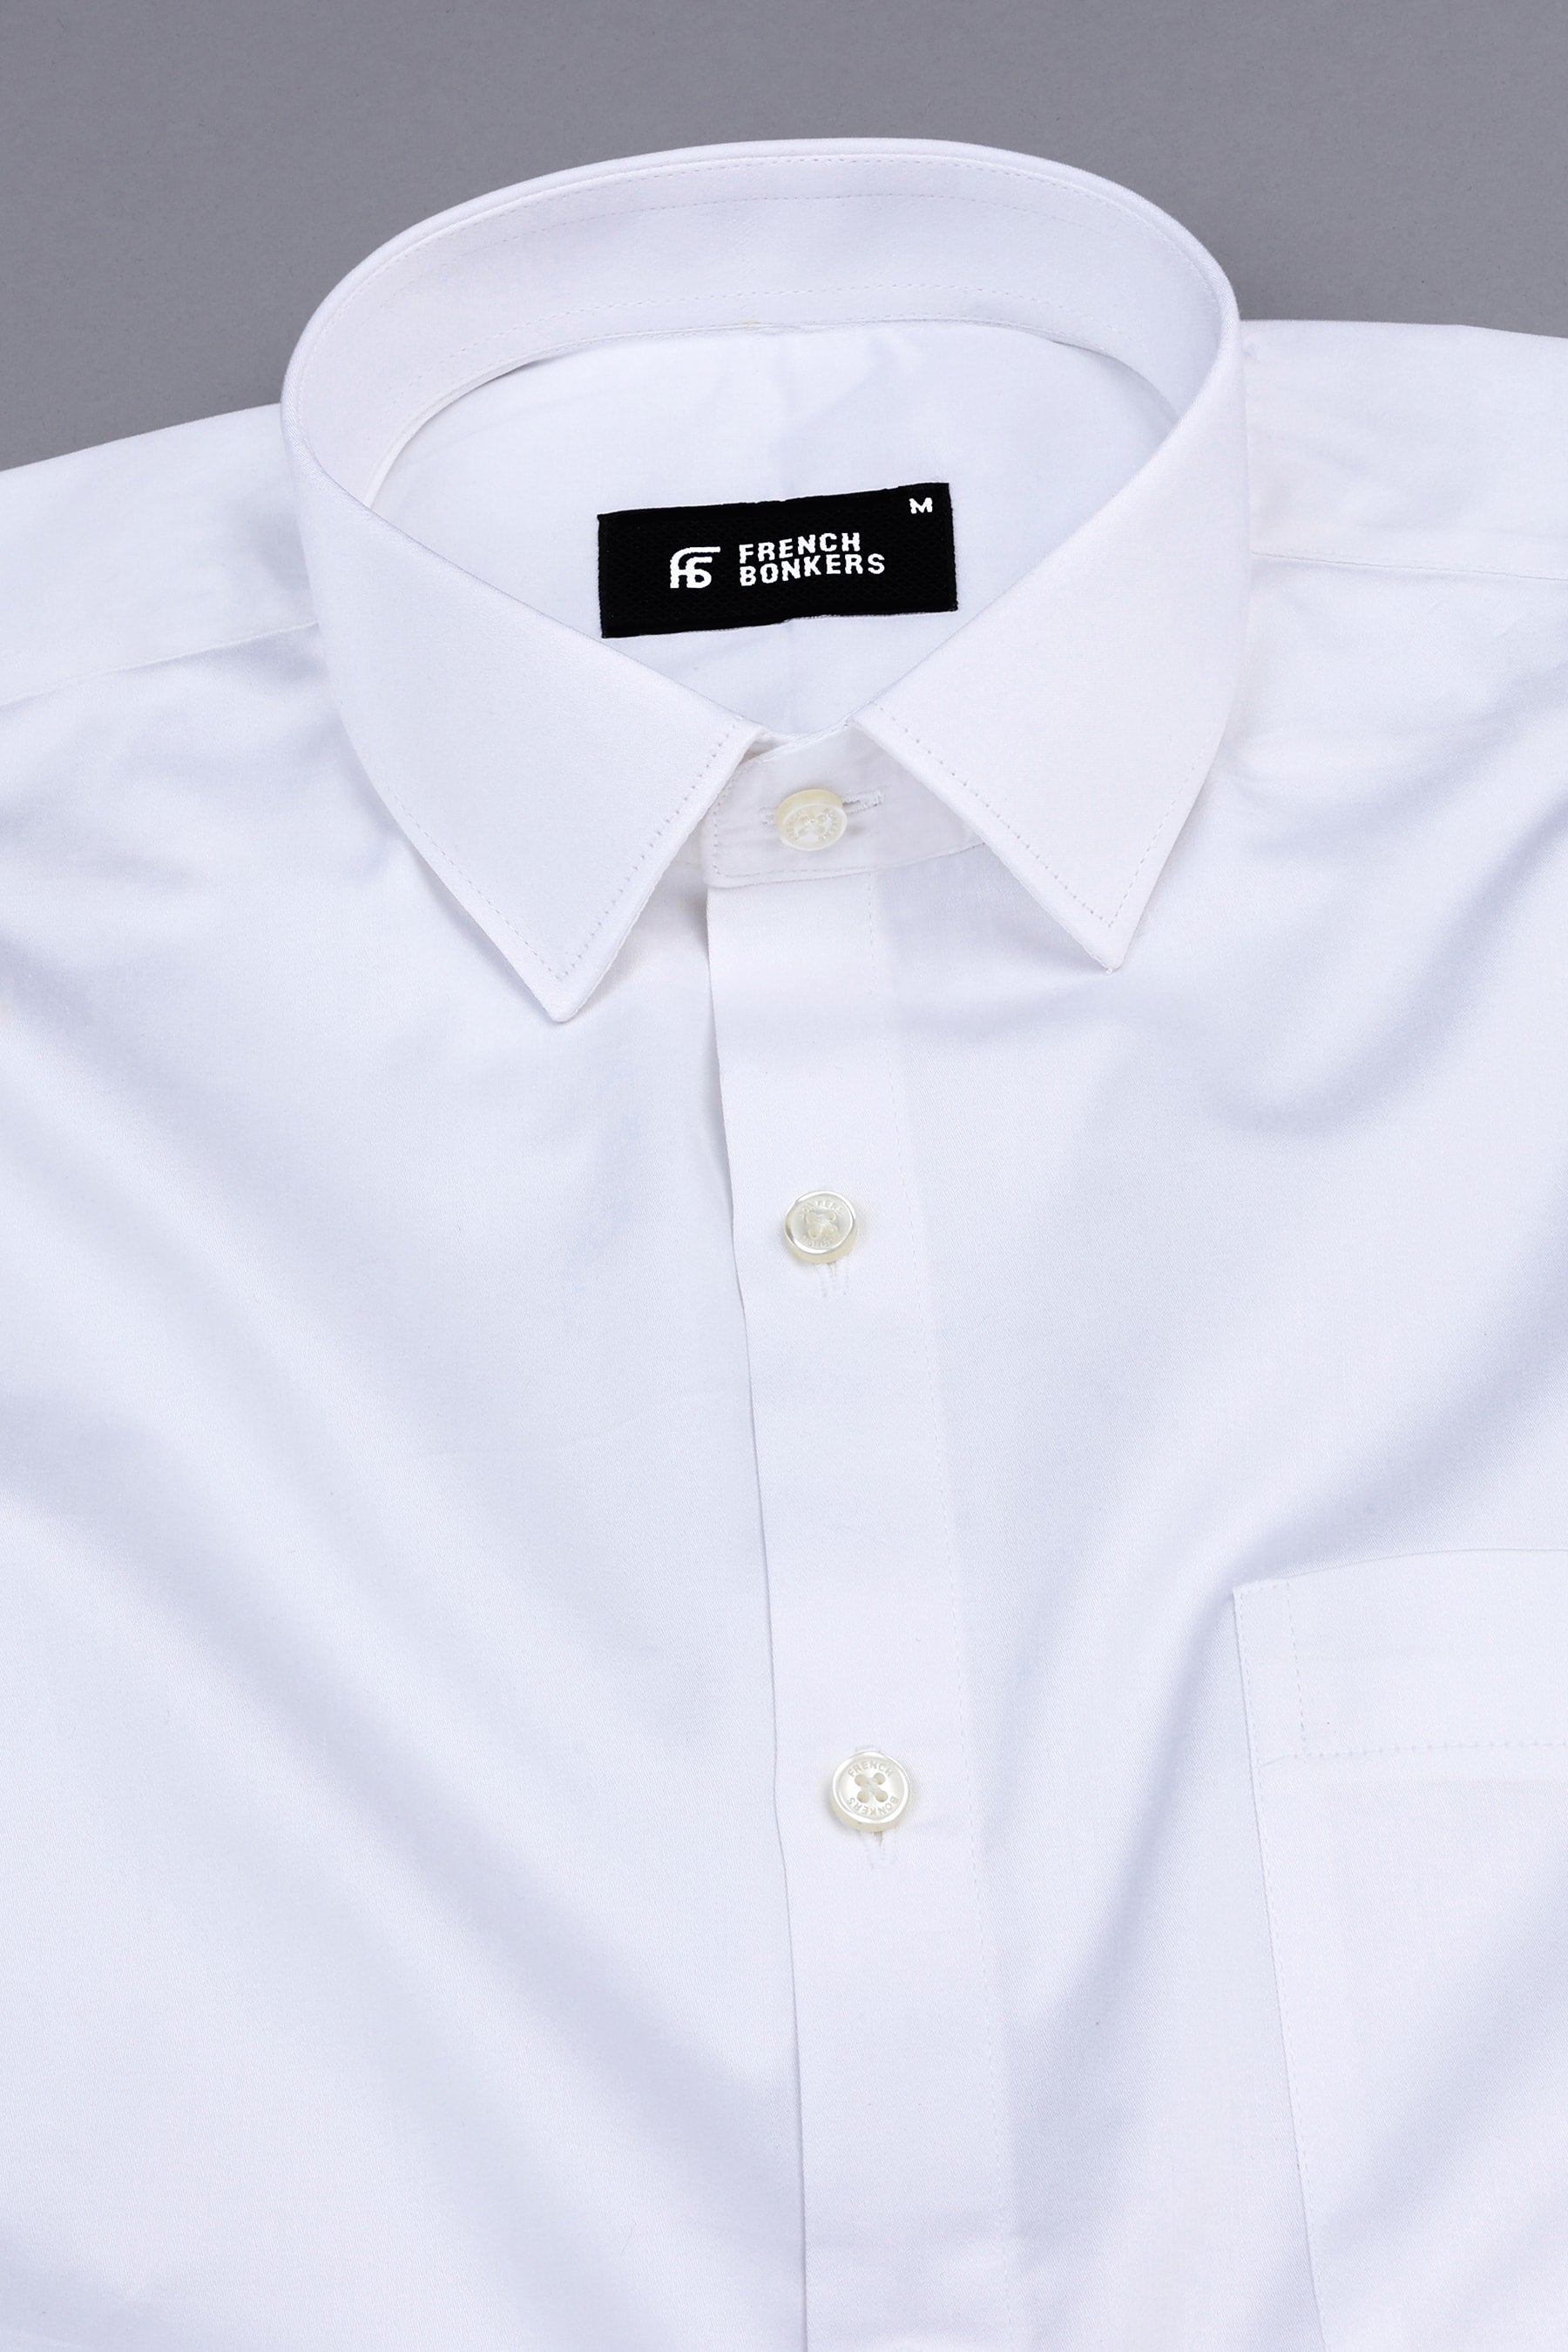 Curd white cotton satin shirt